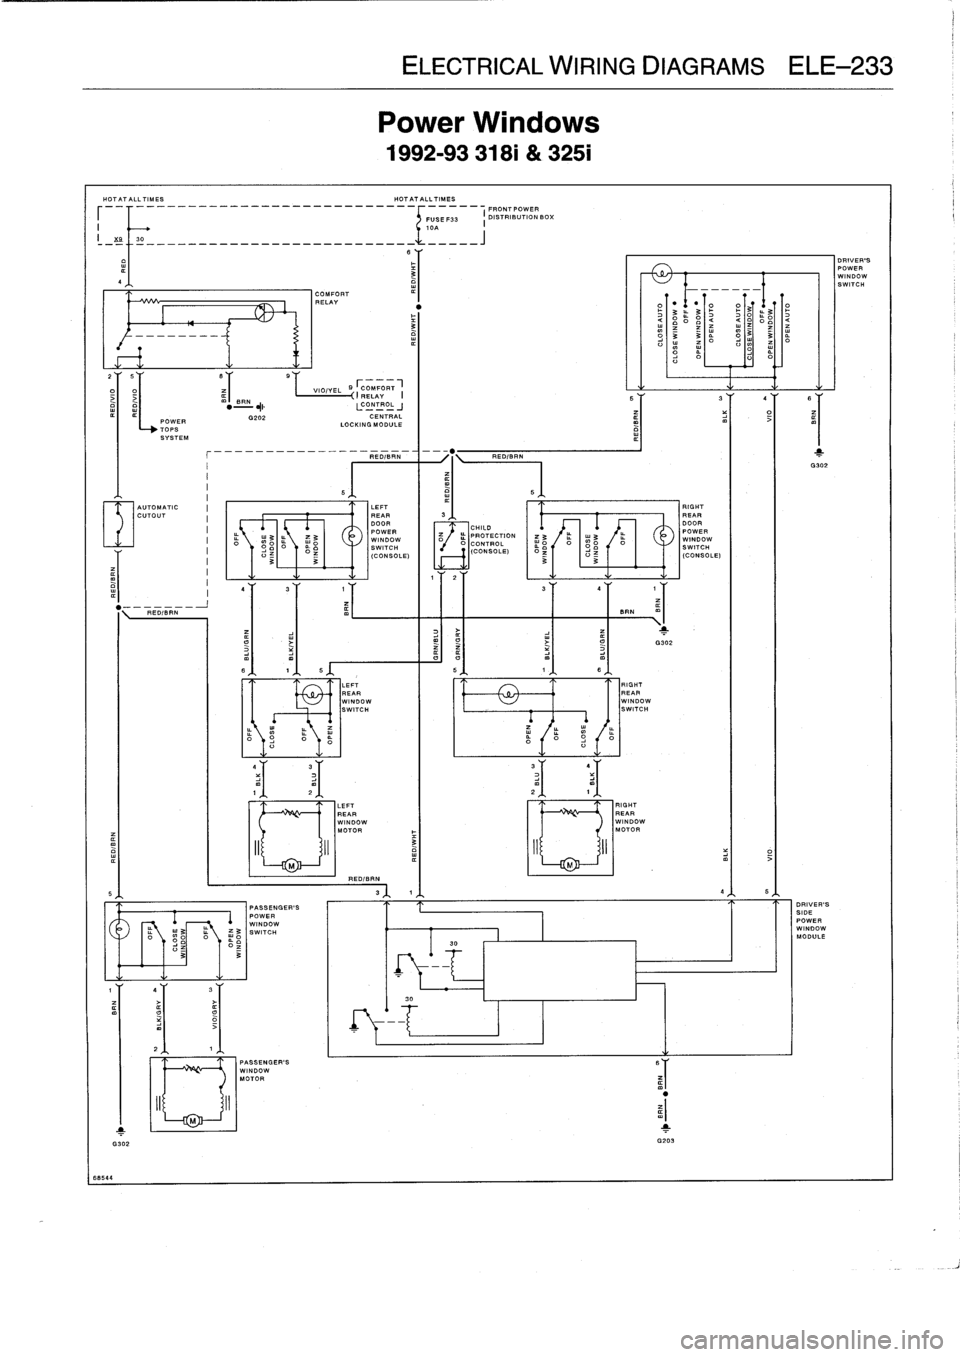 BMW 323i 1995 E36 Workshop Manual 
HO7A7AlL71ME5

	

HOTATALLTIMES

r
--

68544

i

*---AAA
POWER

AUTOMATIC
CUTOUT

O

PASSENGERS
WINDOWMOTOR

V
1
G3D2

B
r
COMFDRT~
VIOIYEL
(IRELAY
I

ELECTRICAL
WIRING
DIAGRAMS
ELE-233

Power
Windo